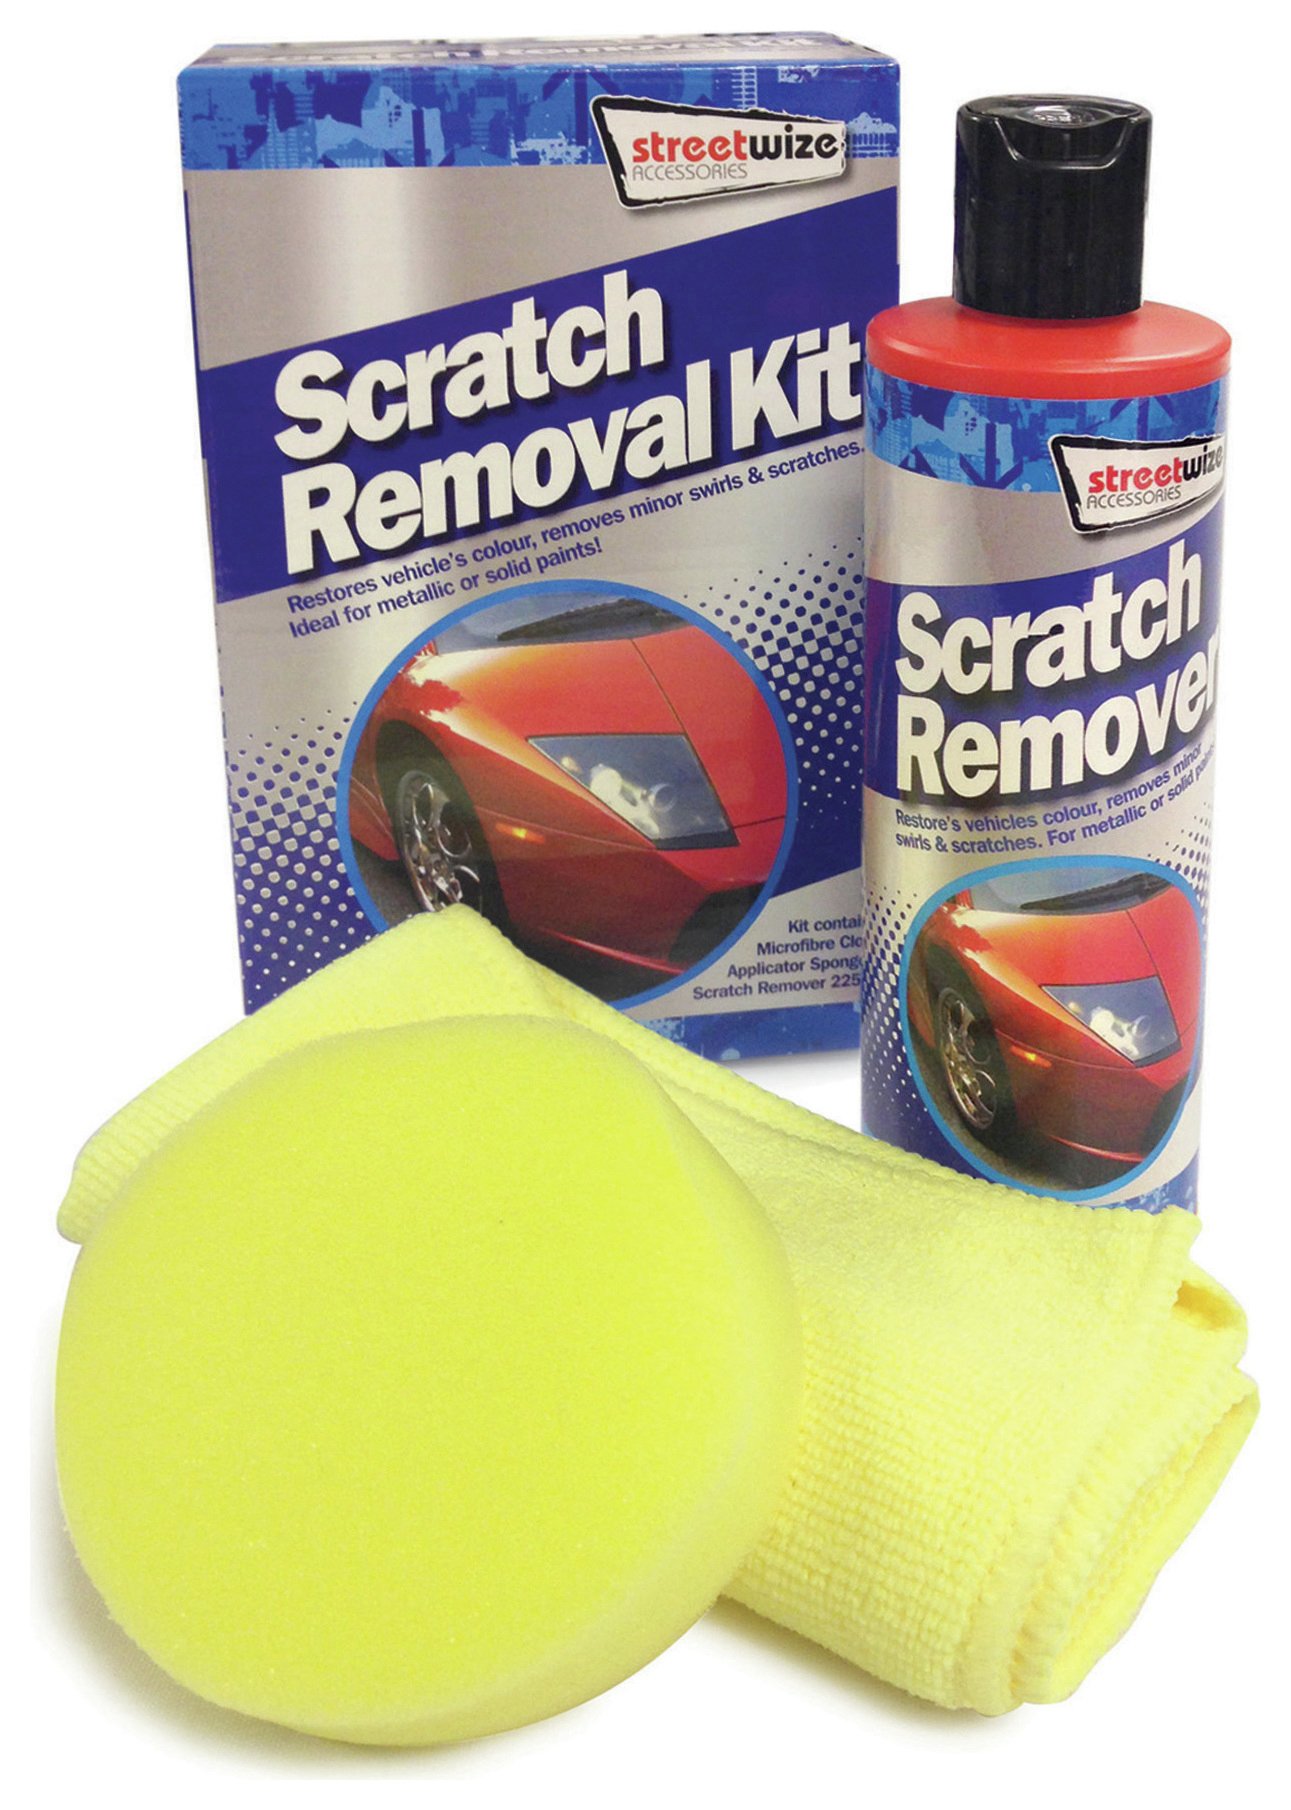 Streetwize Scratch Removal Kit. Review